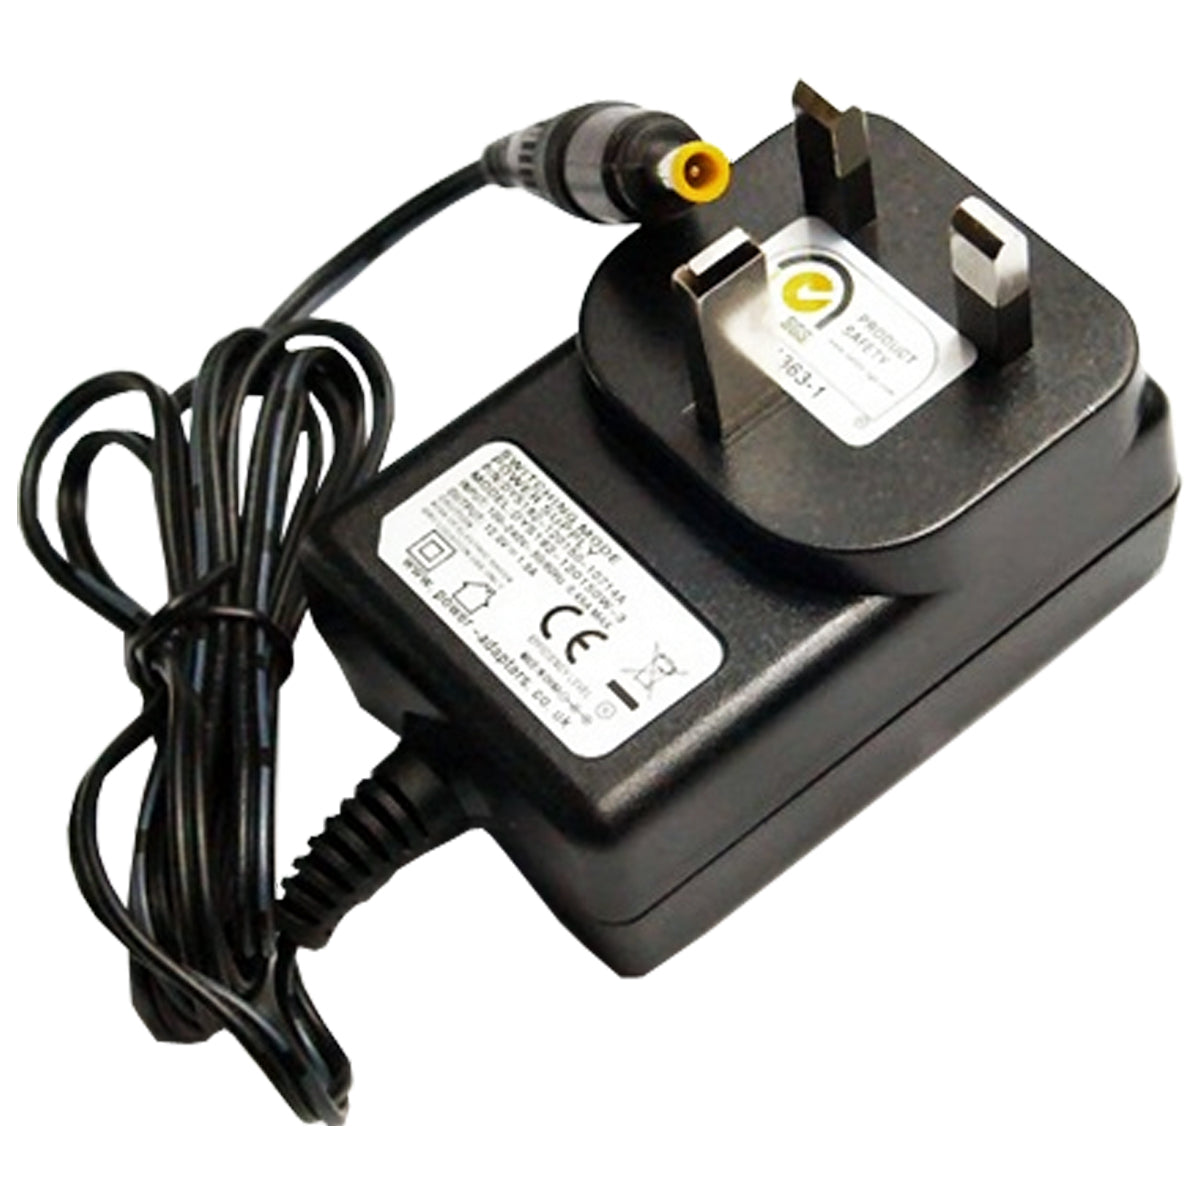 Makita SE00000102 AC Adapter For DMR108/DMR108B Radio